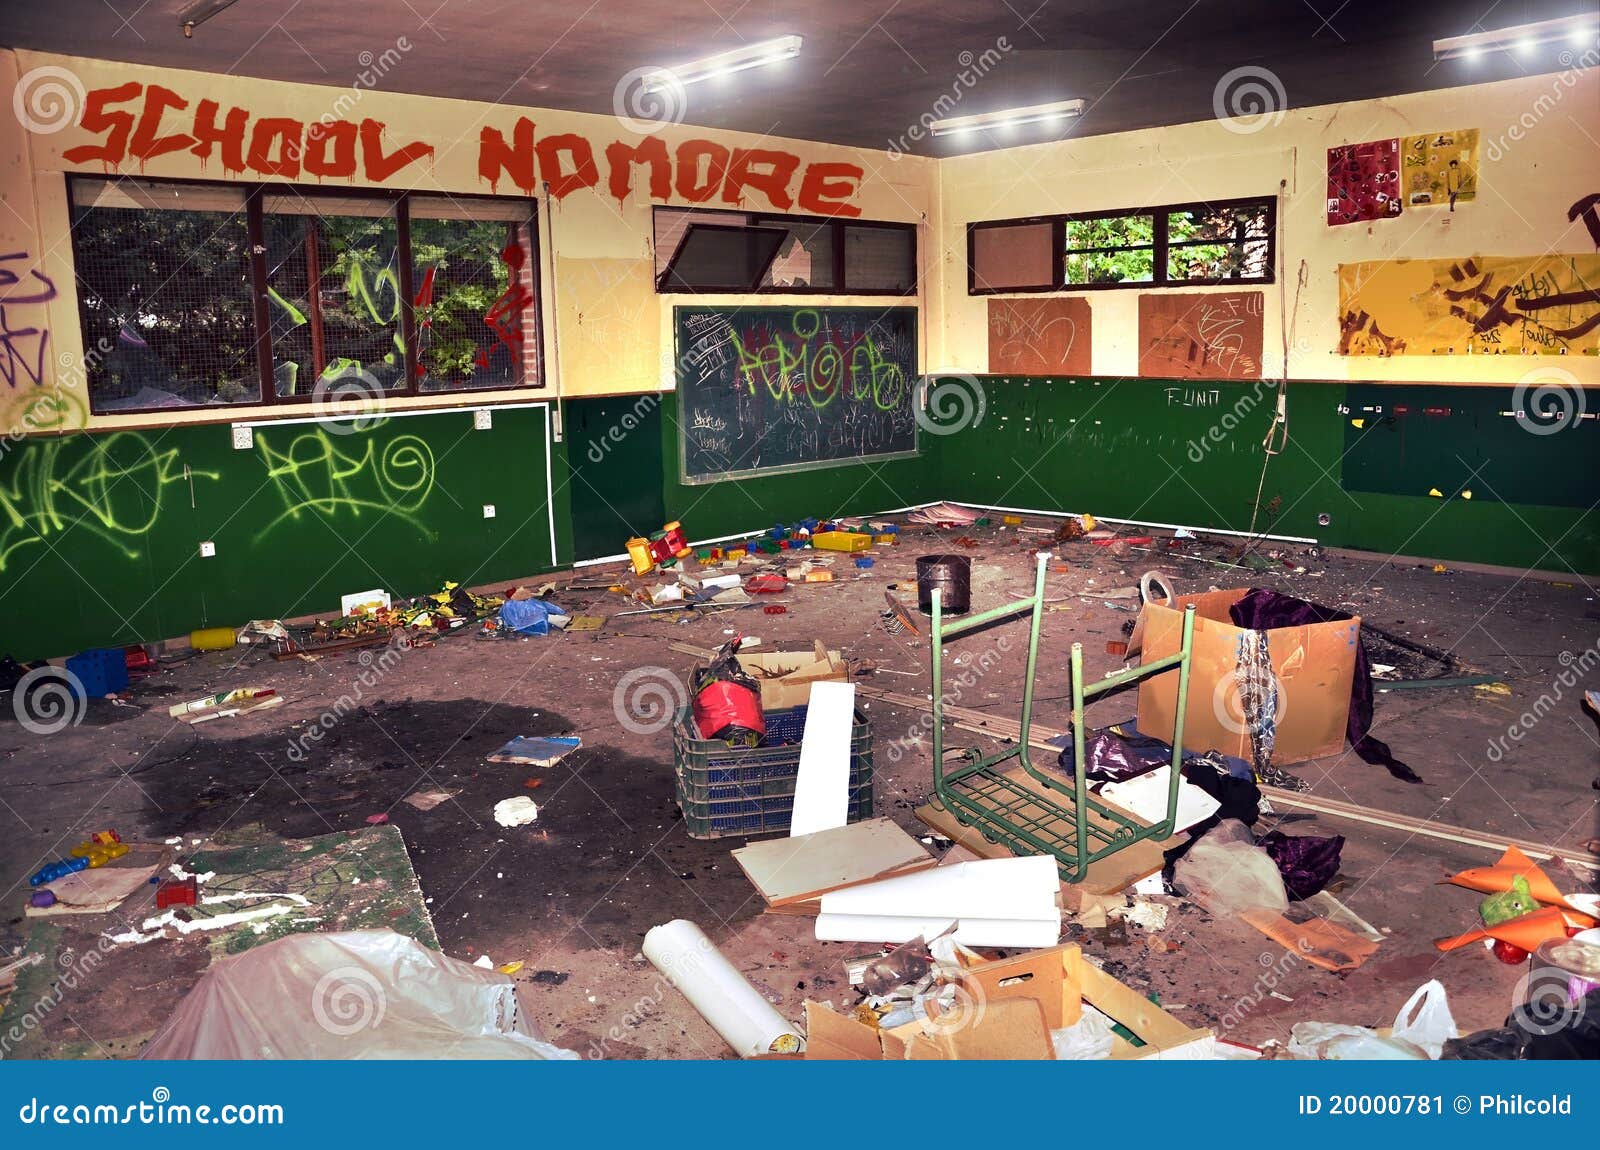 School Vandalism Stock Image - Image: 20000781